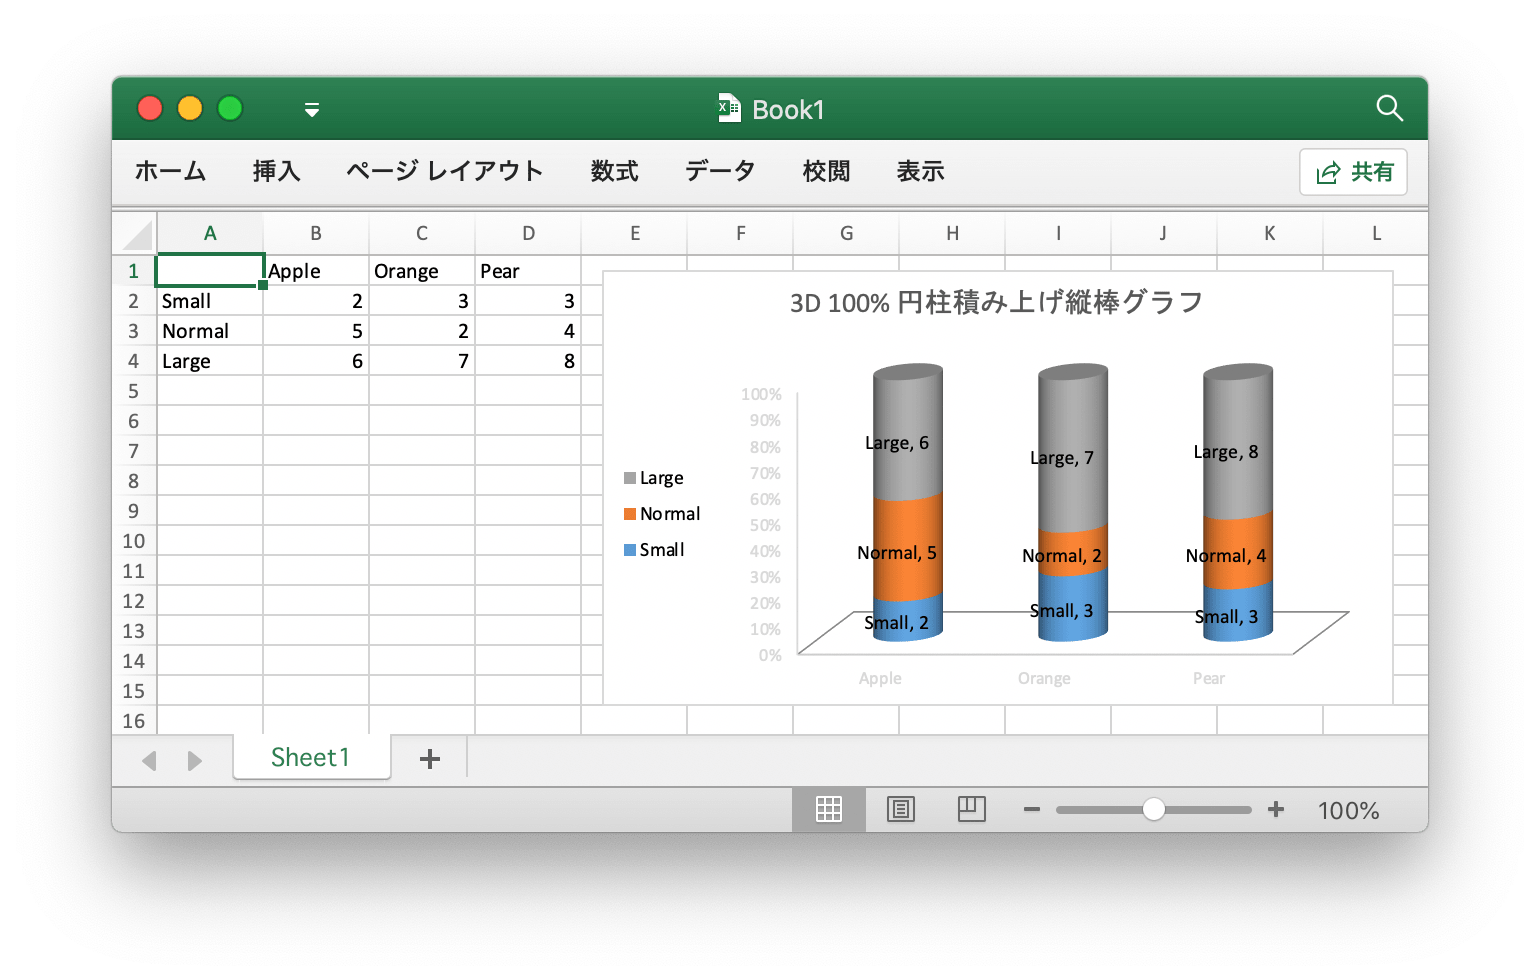 Go 言語を使用して Excel ドキュメントで 3D 100% 円柱積み上げ縦棒グラフ 作成する